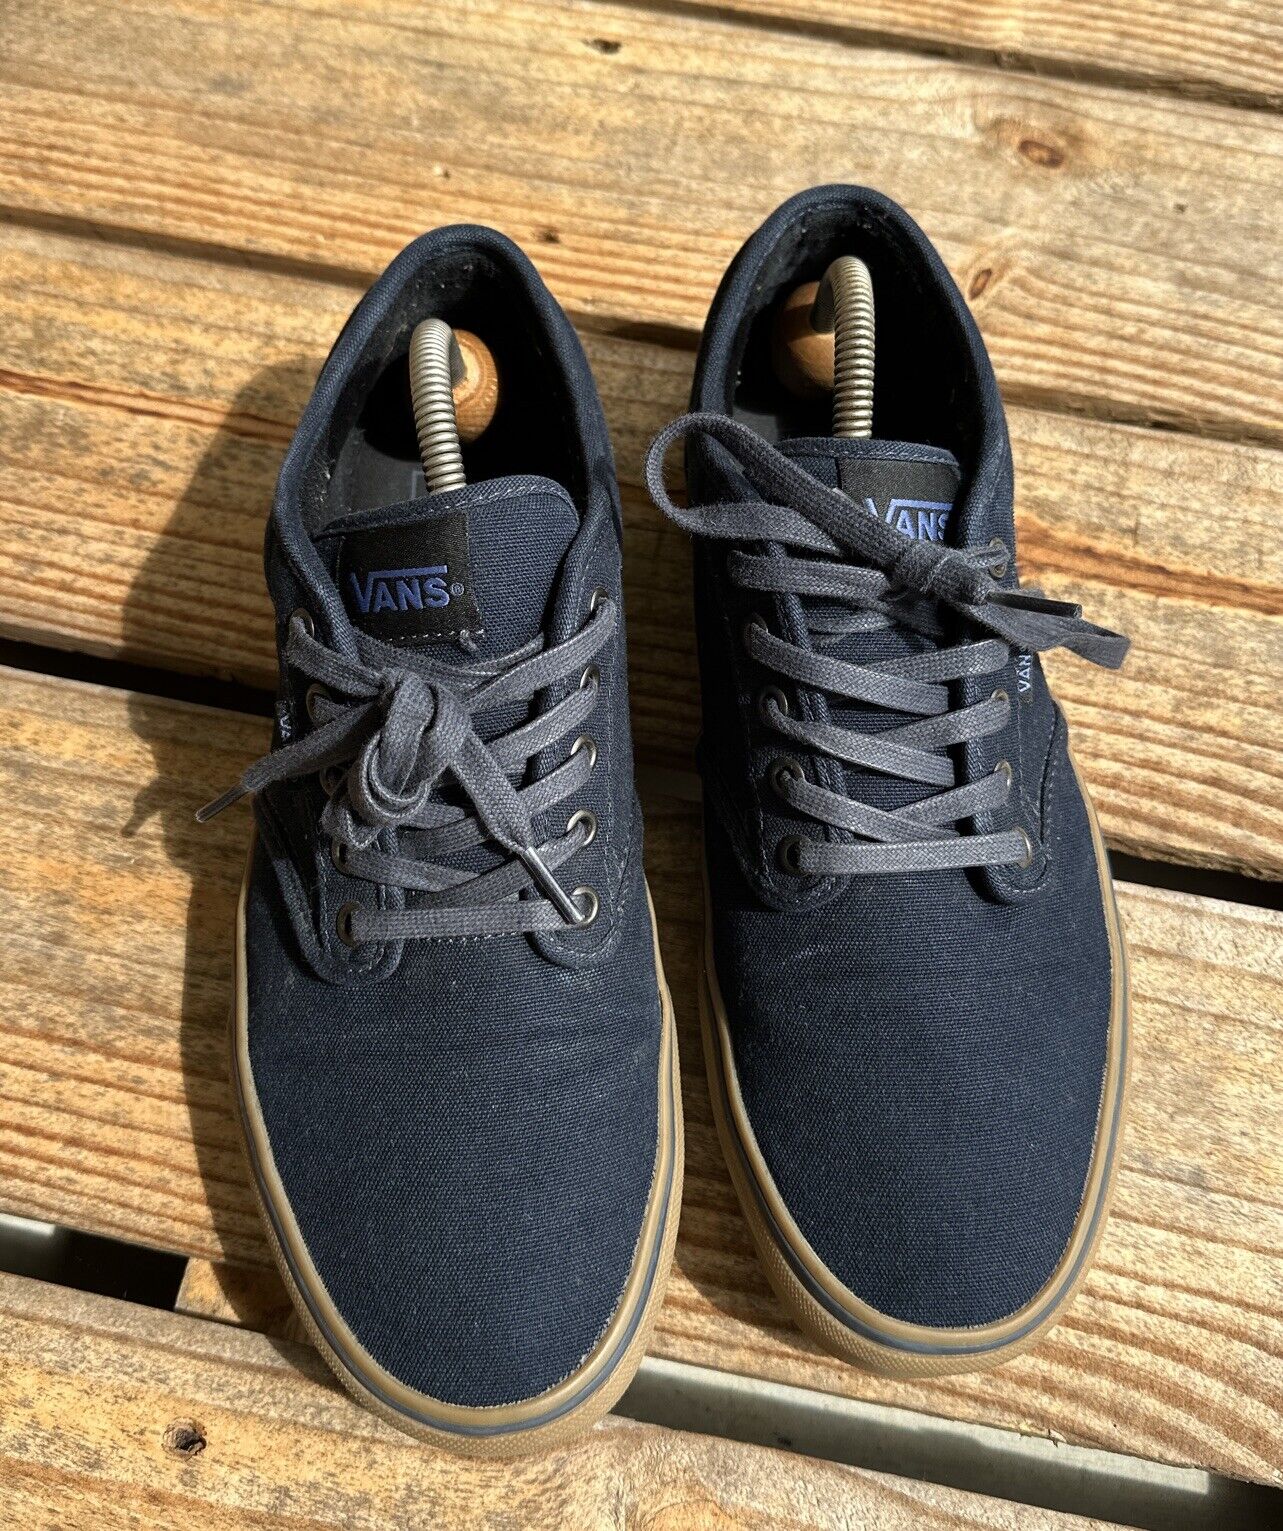 Vans OTW Of The Wall Men's Low-Top Sneakers Blue With Gum Soles Size US 10